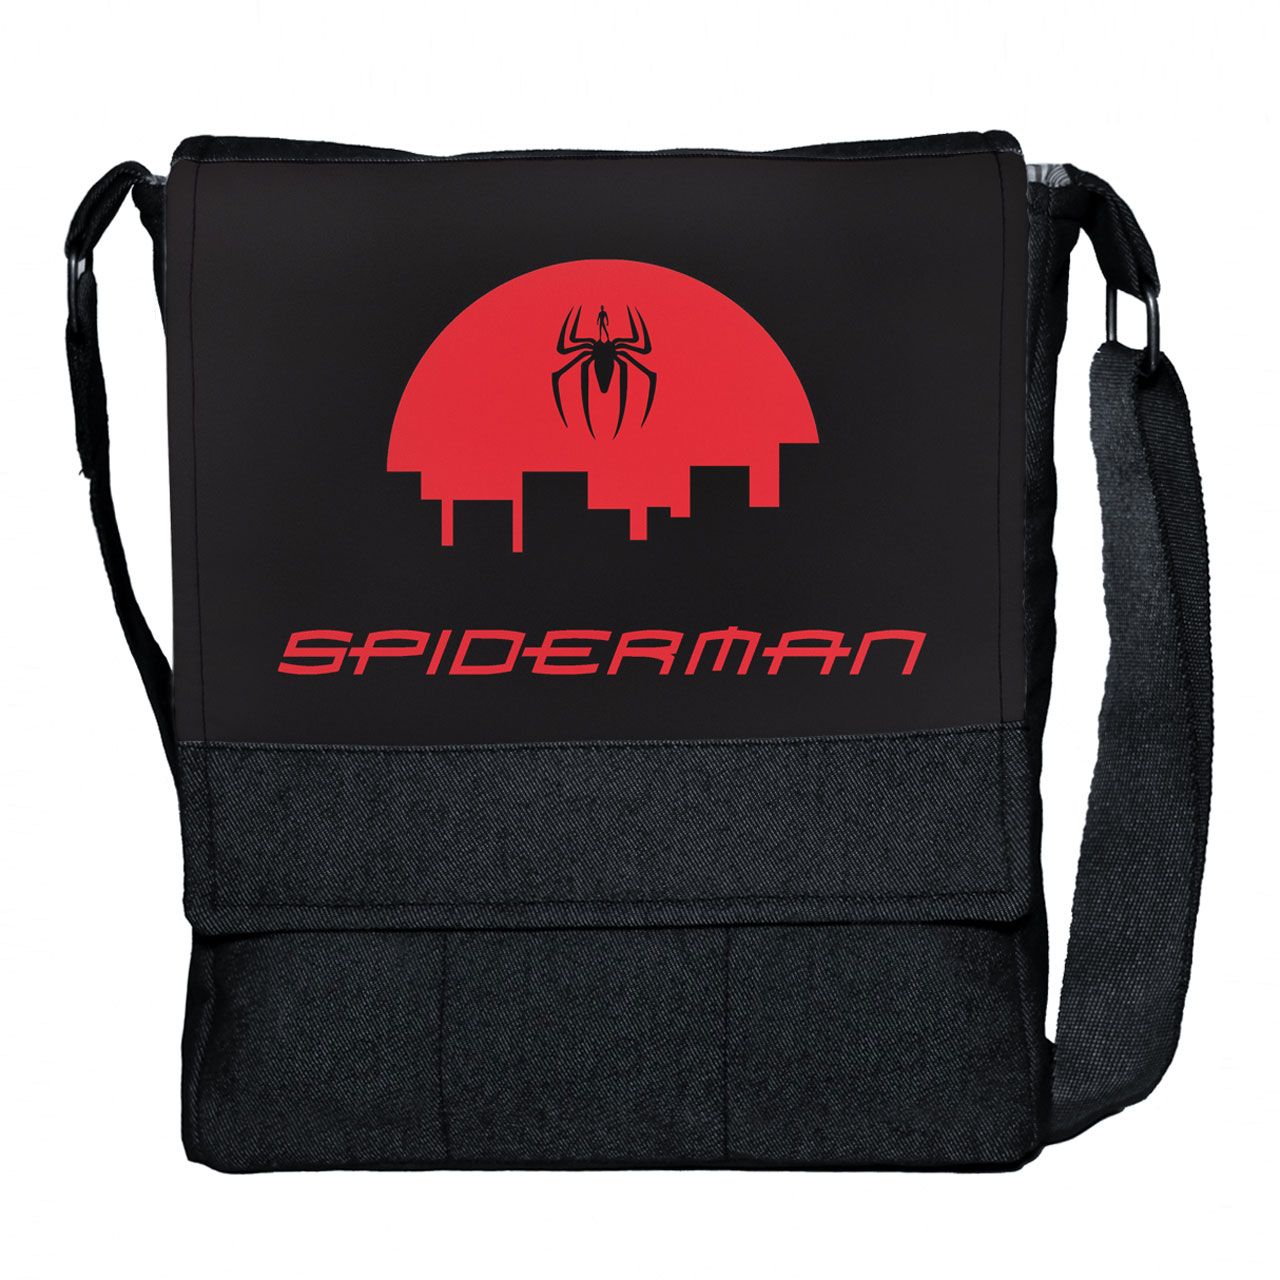 کیف دوشی چی چاپ طرح Spiderman کد 65629 -  - 1